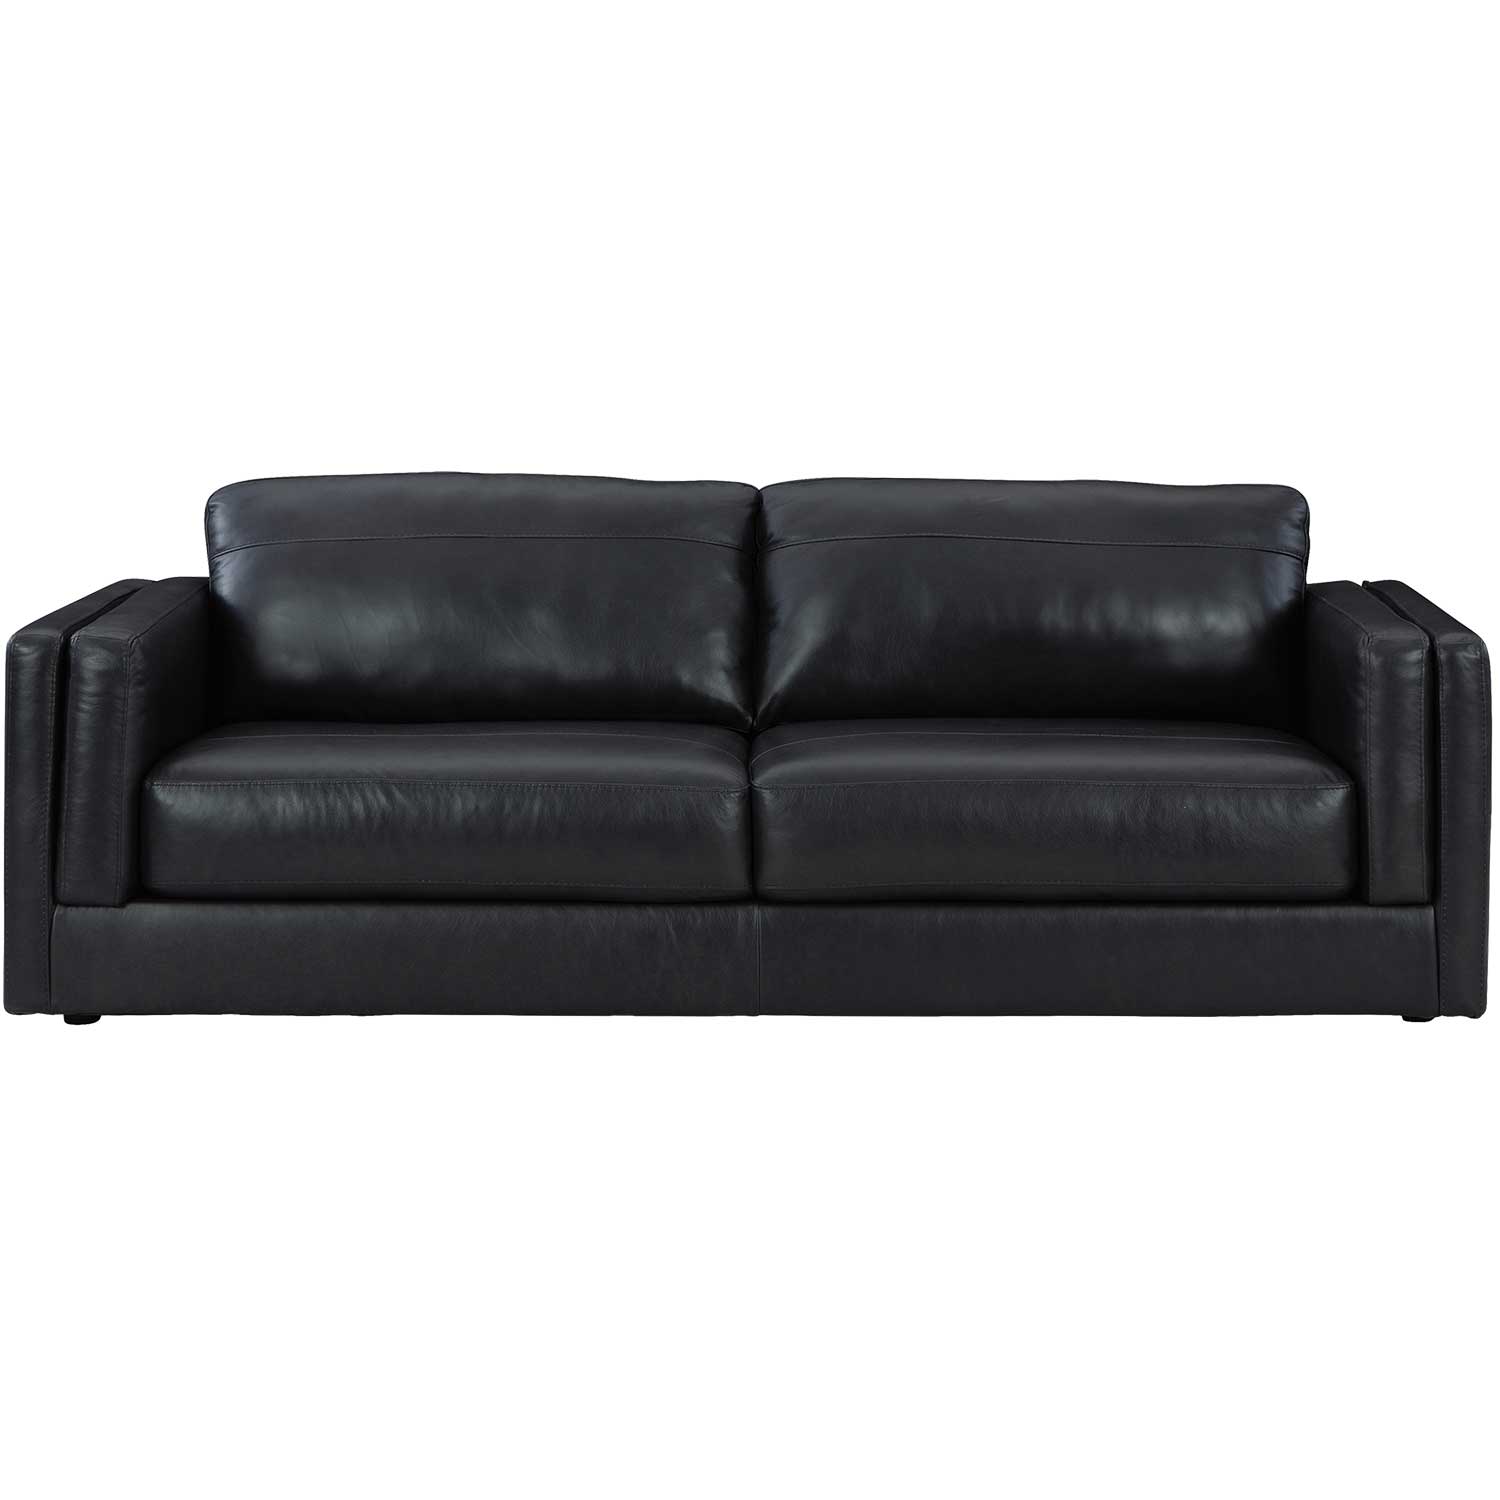 Amiata Onyx Leather Sofa | 0DD-574S | AFW.com